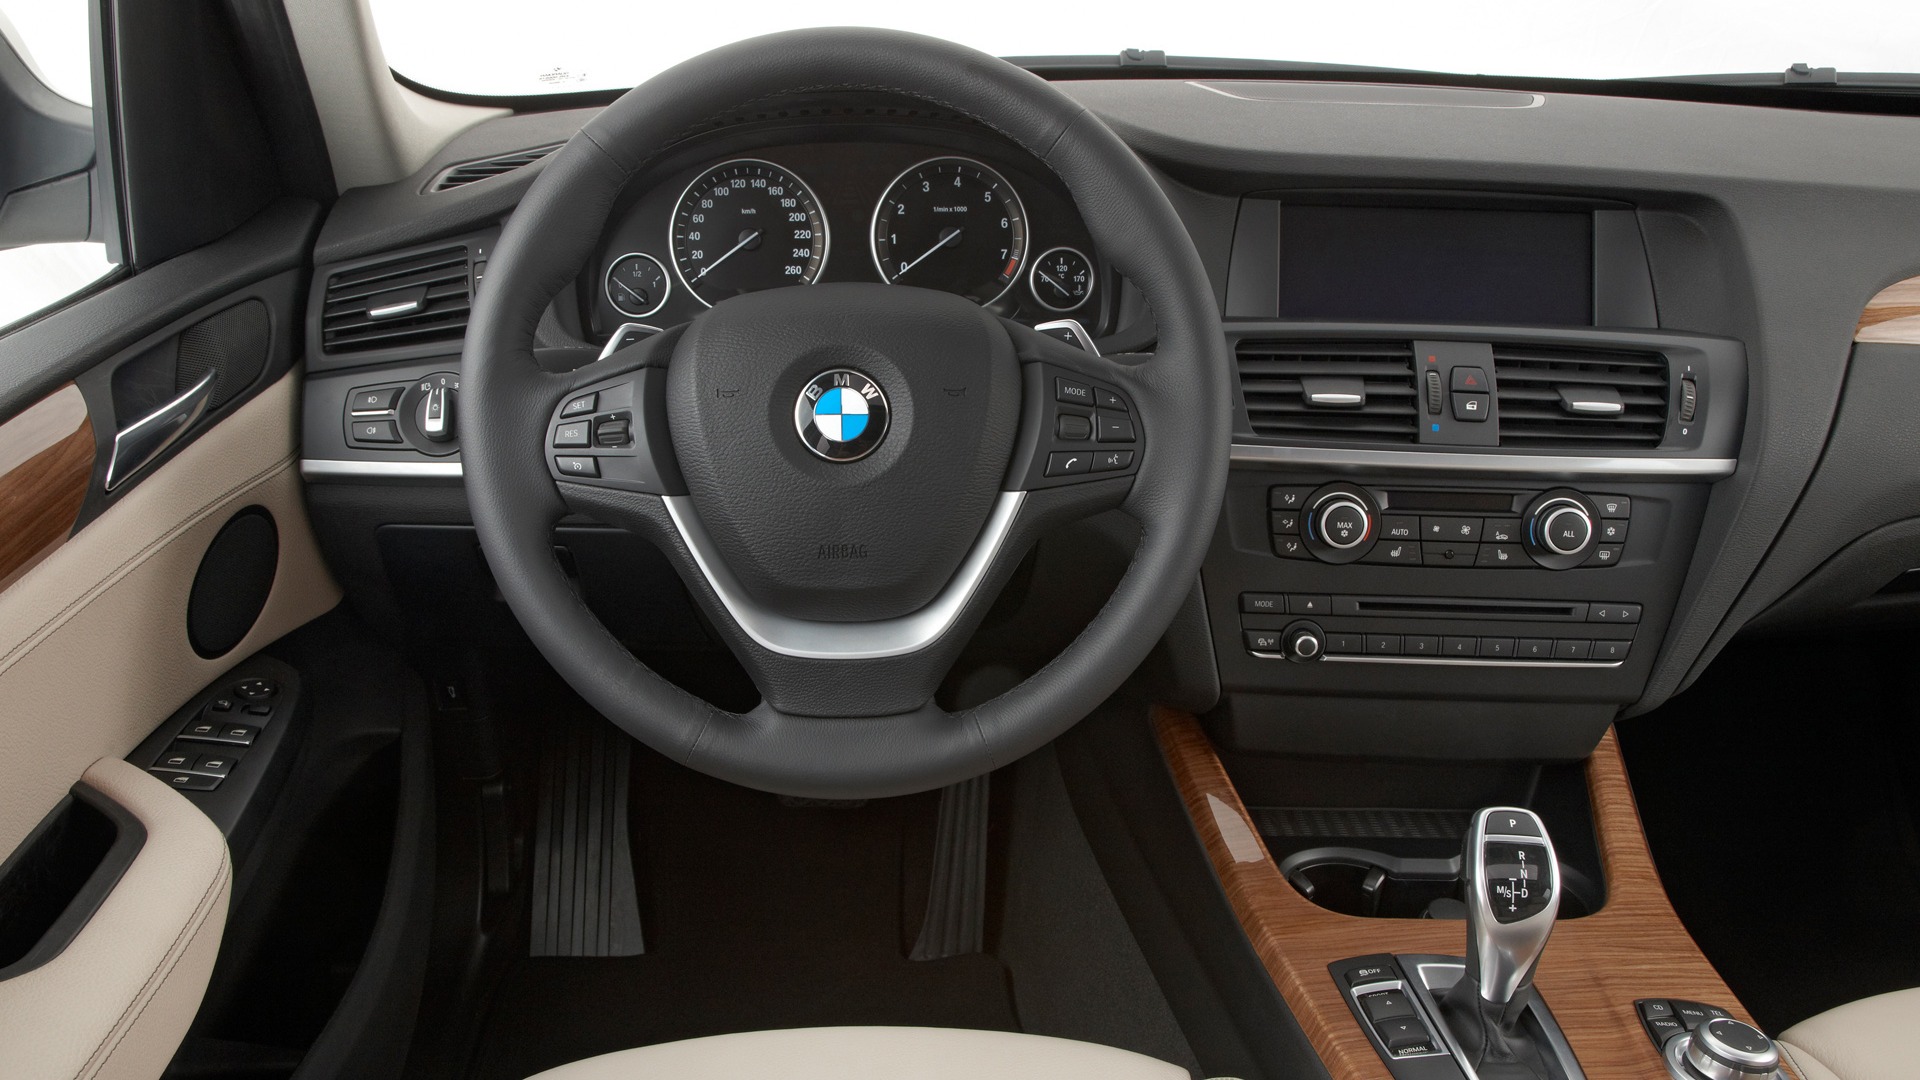 BMW X3 xDrive35i - 2010 寶馬(一) #40 - 1920x1080